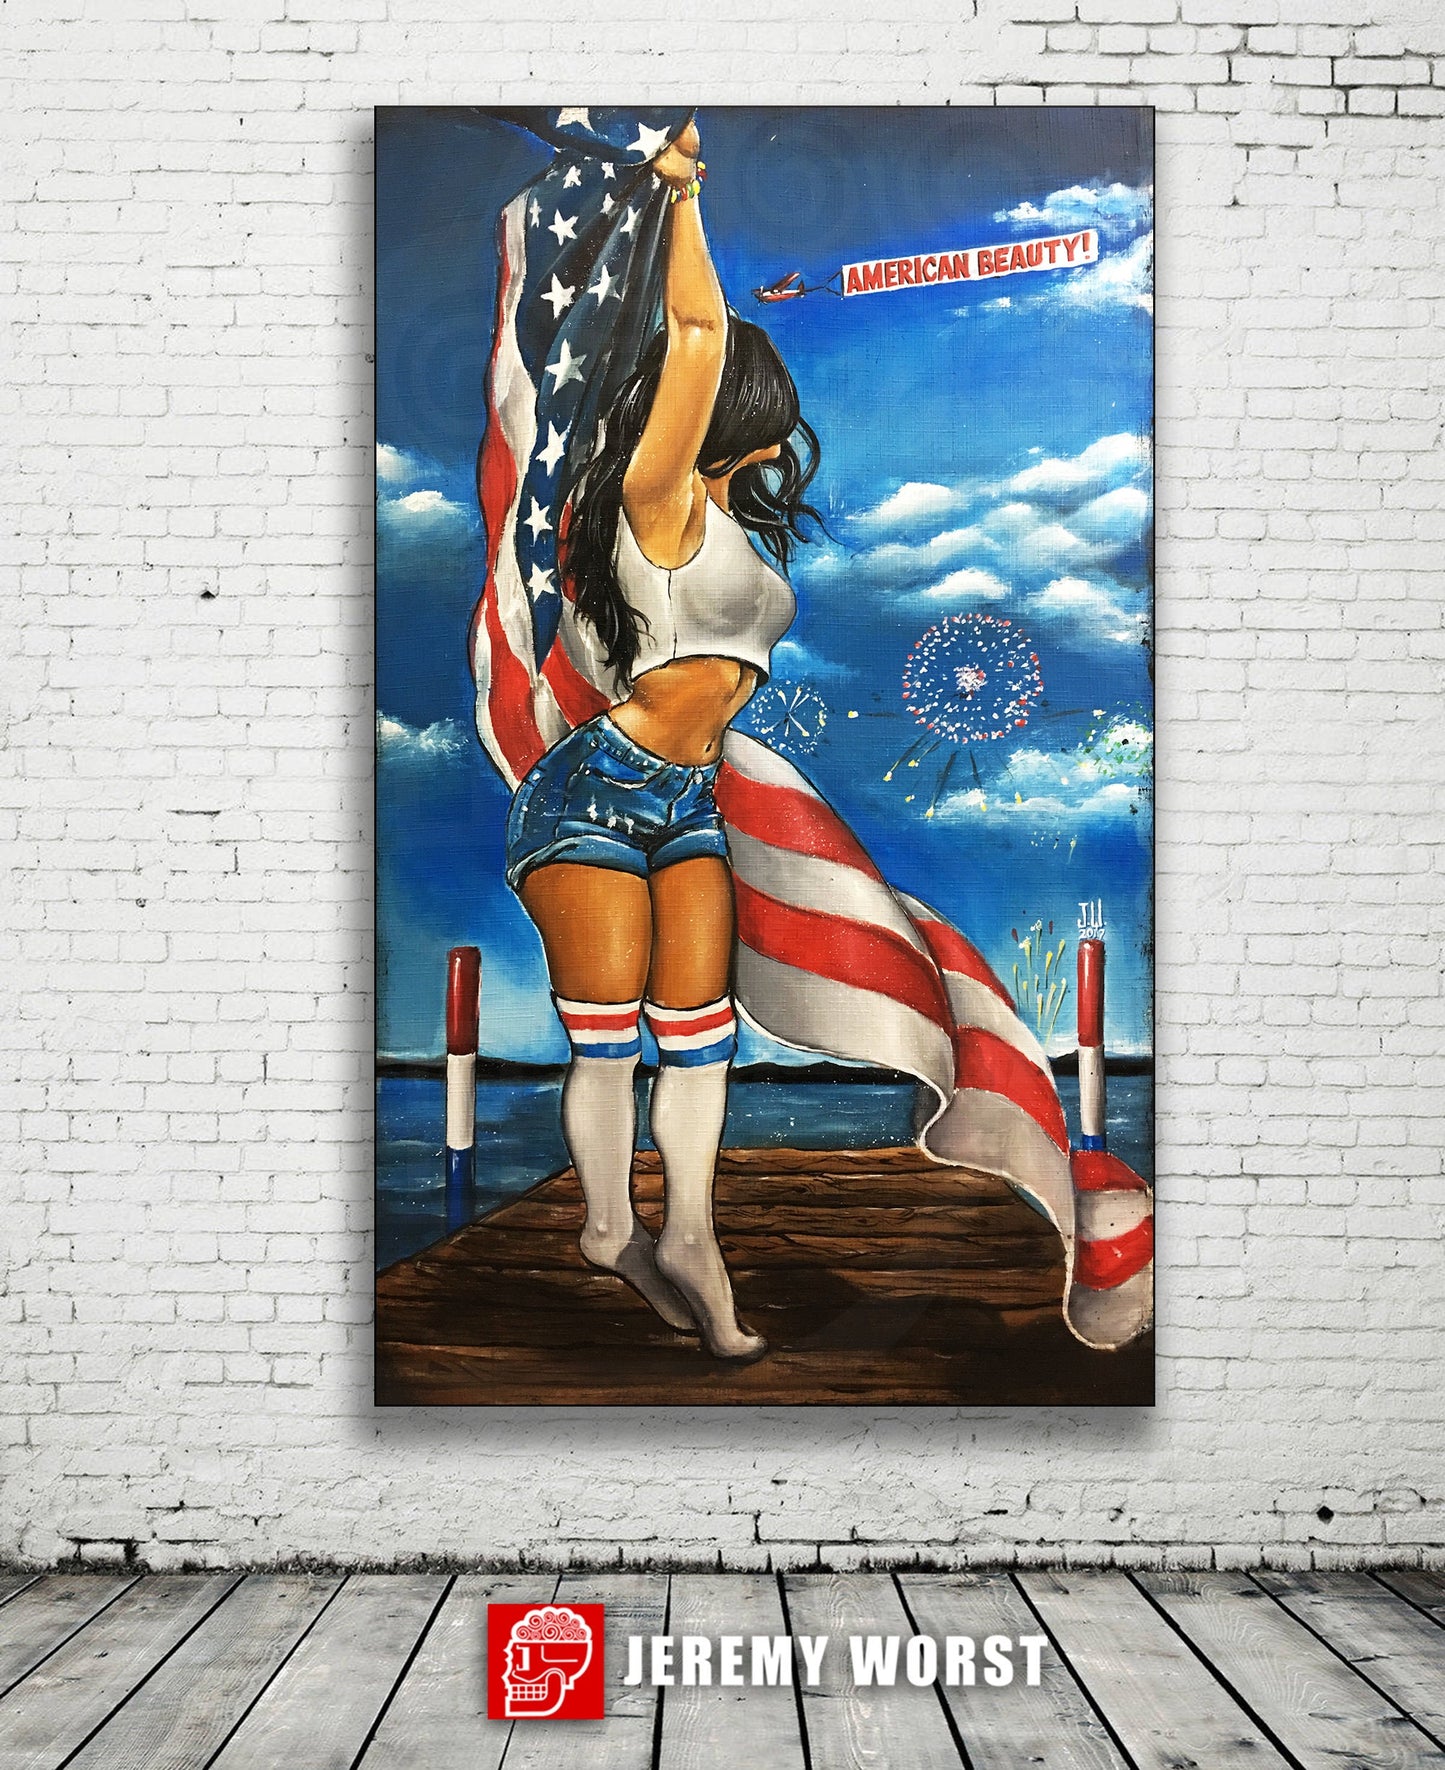 JEREMY WORST American Beauty ART Wall decor Painting president election sexy girl tube socks democrat vote rally politics conservative maga